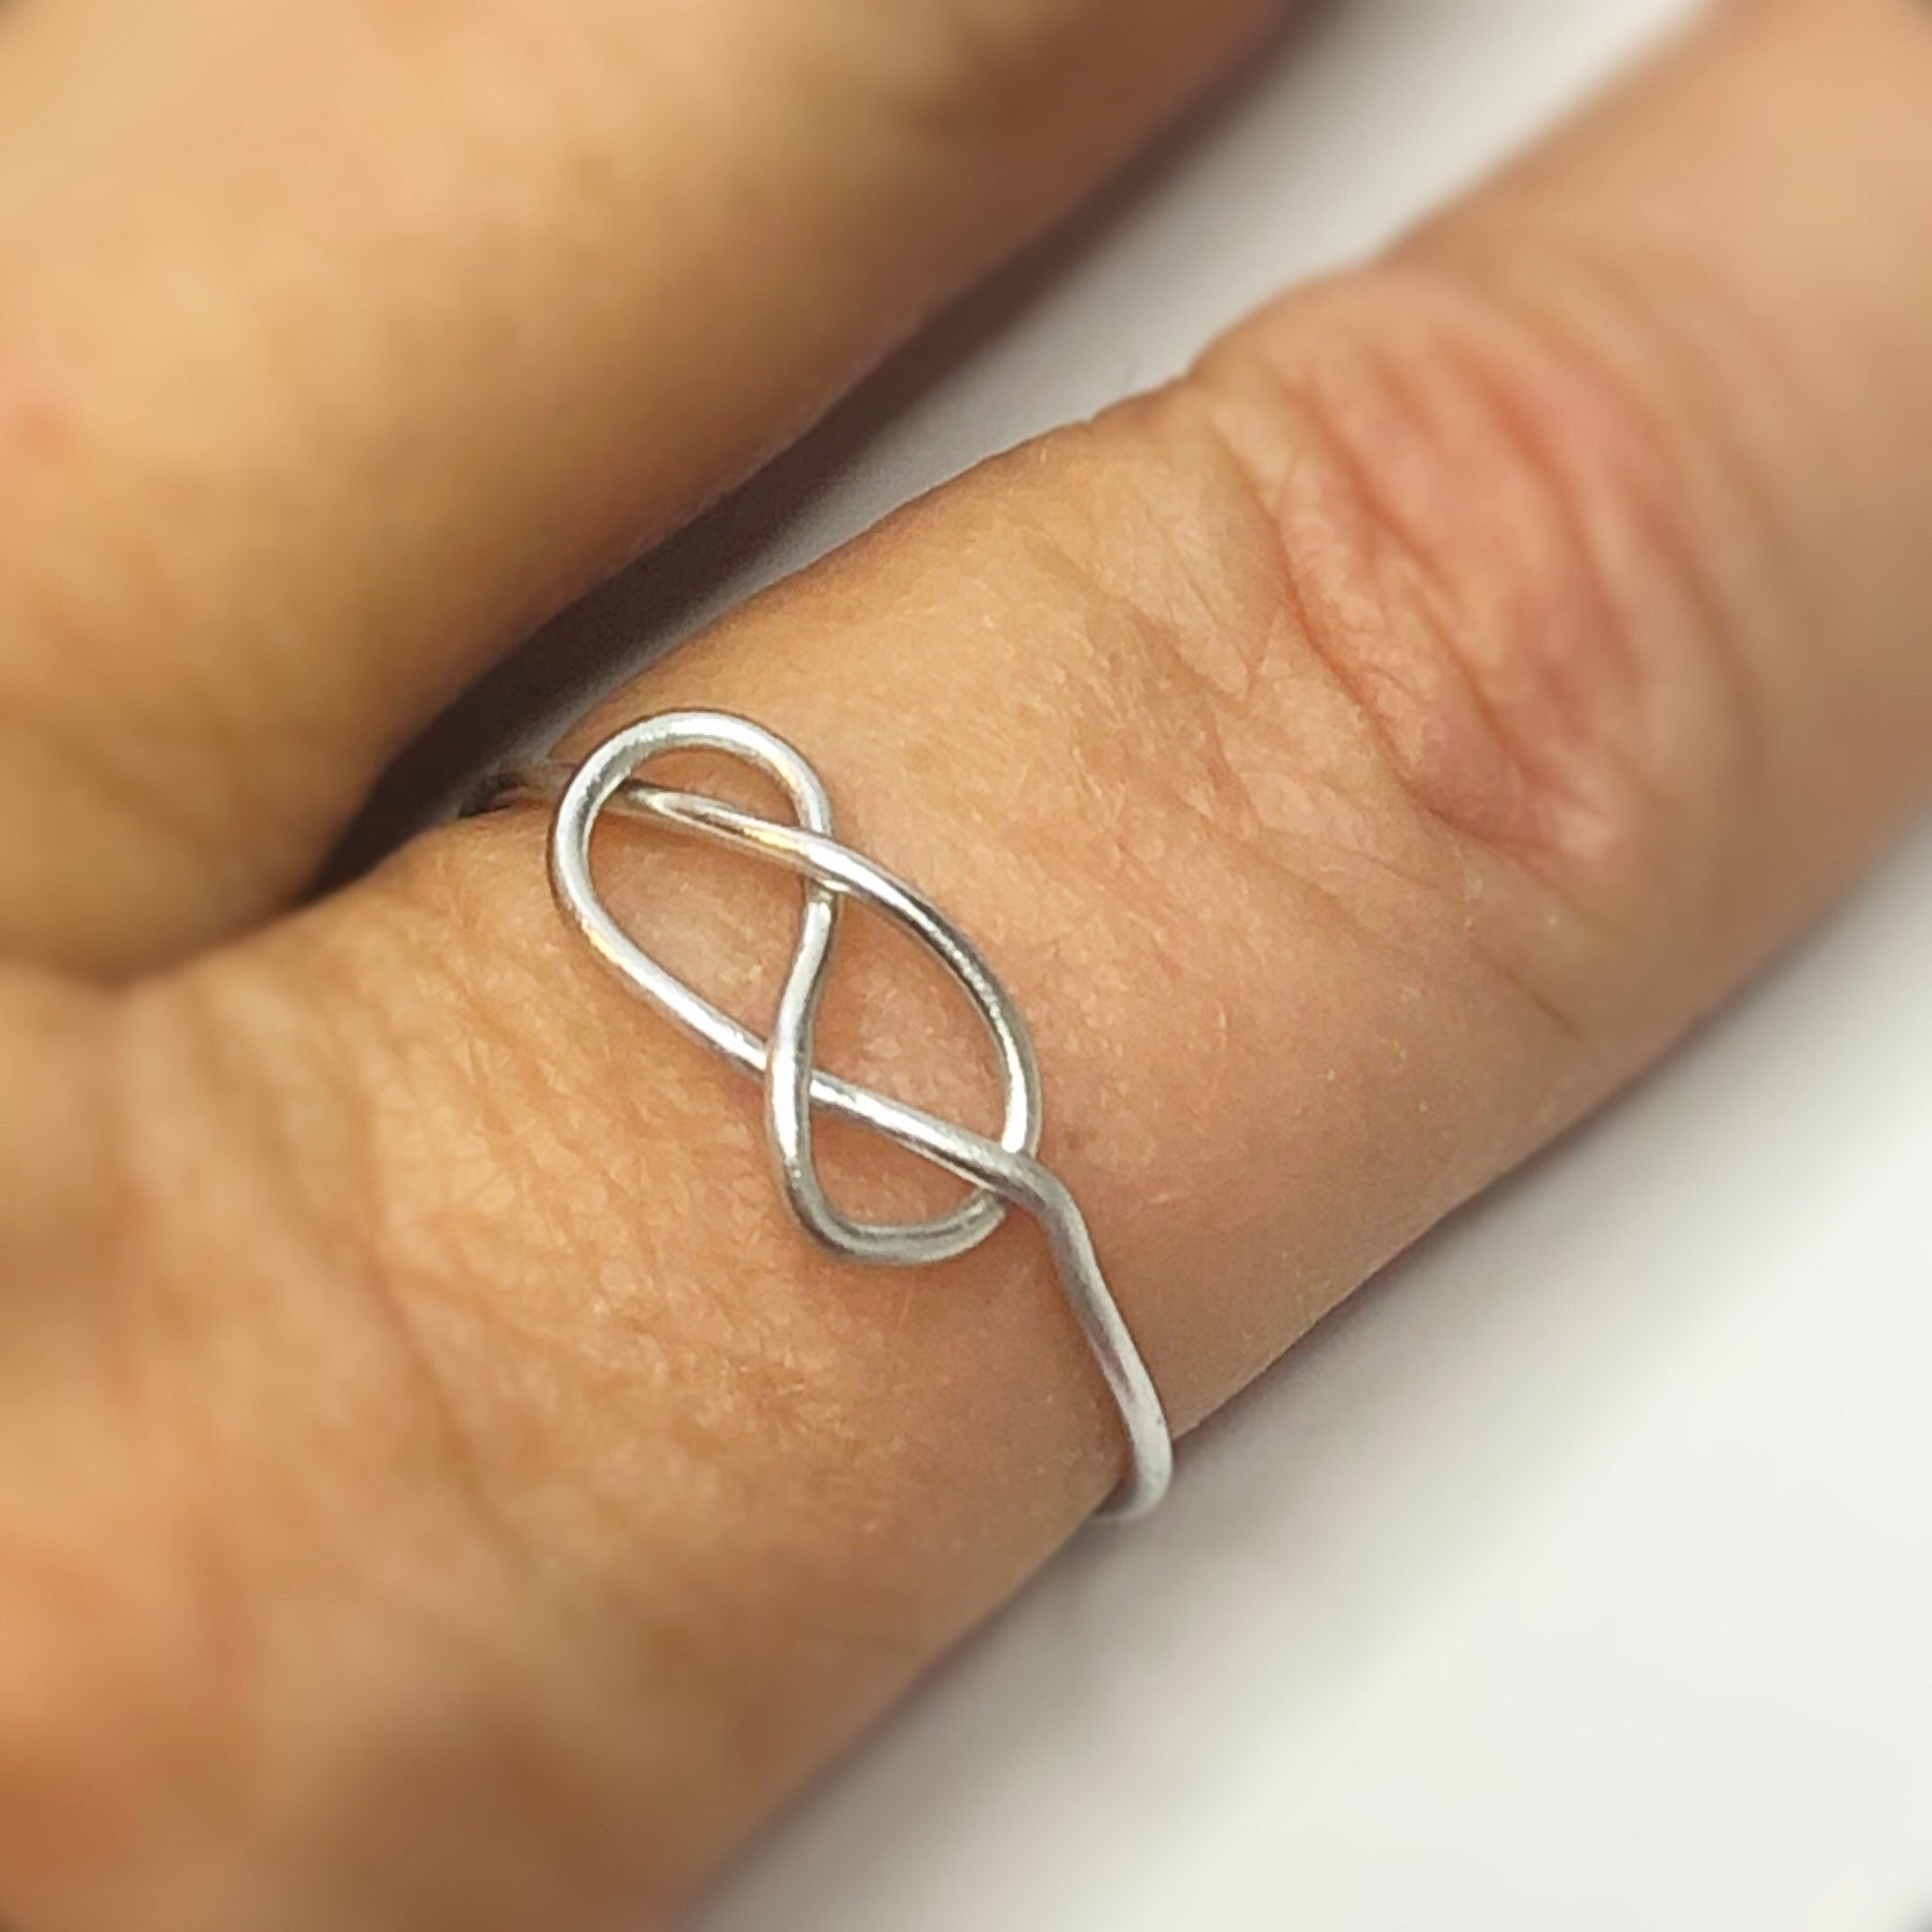 Adjustable celtic knot braid ring • Silver irish jewelry Celtic fc ring • Celtic cross knot ring • Infinity eternity band • Irish Love knot